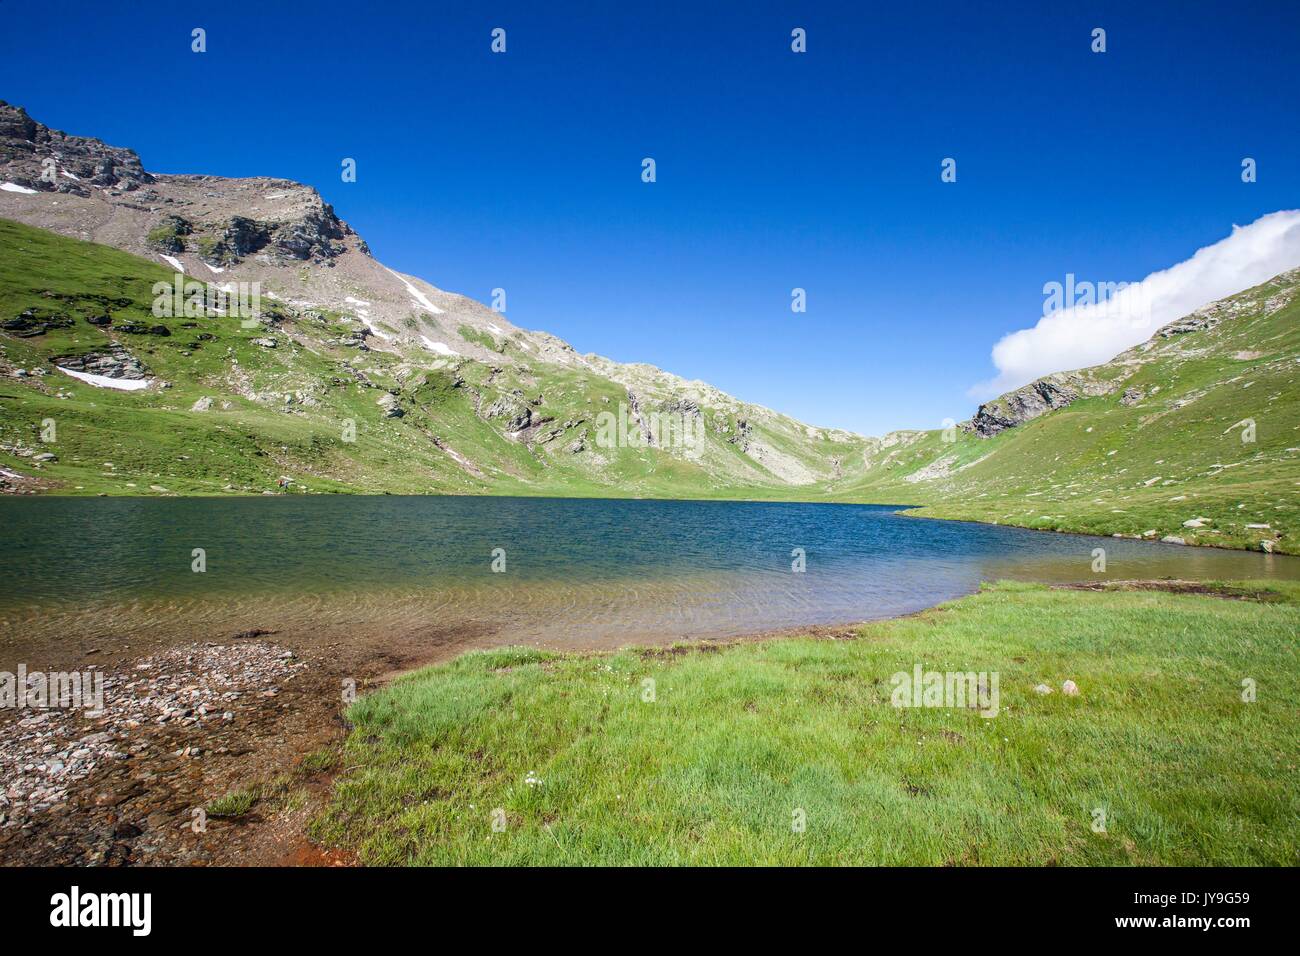 Summer contrasts at Baldiscio lake. Campodolcino, Vallespluga, Valchiavenna, Lombardy, Italy Europe Stock Photo